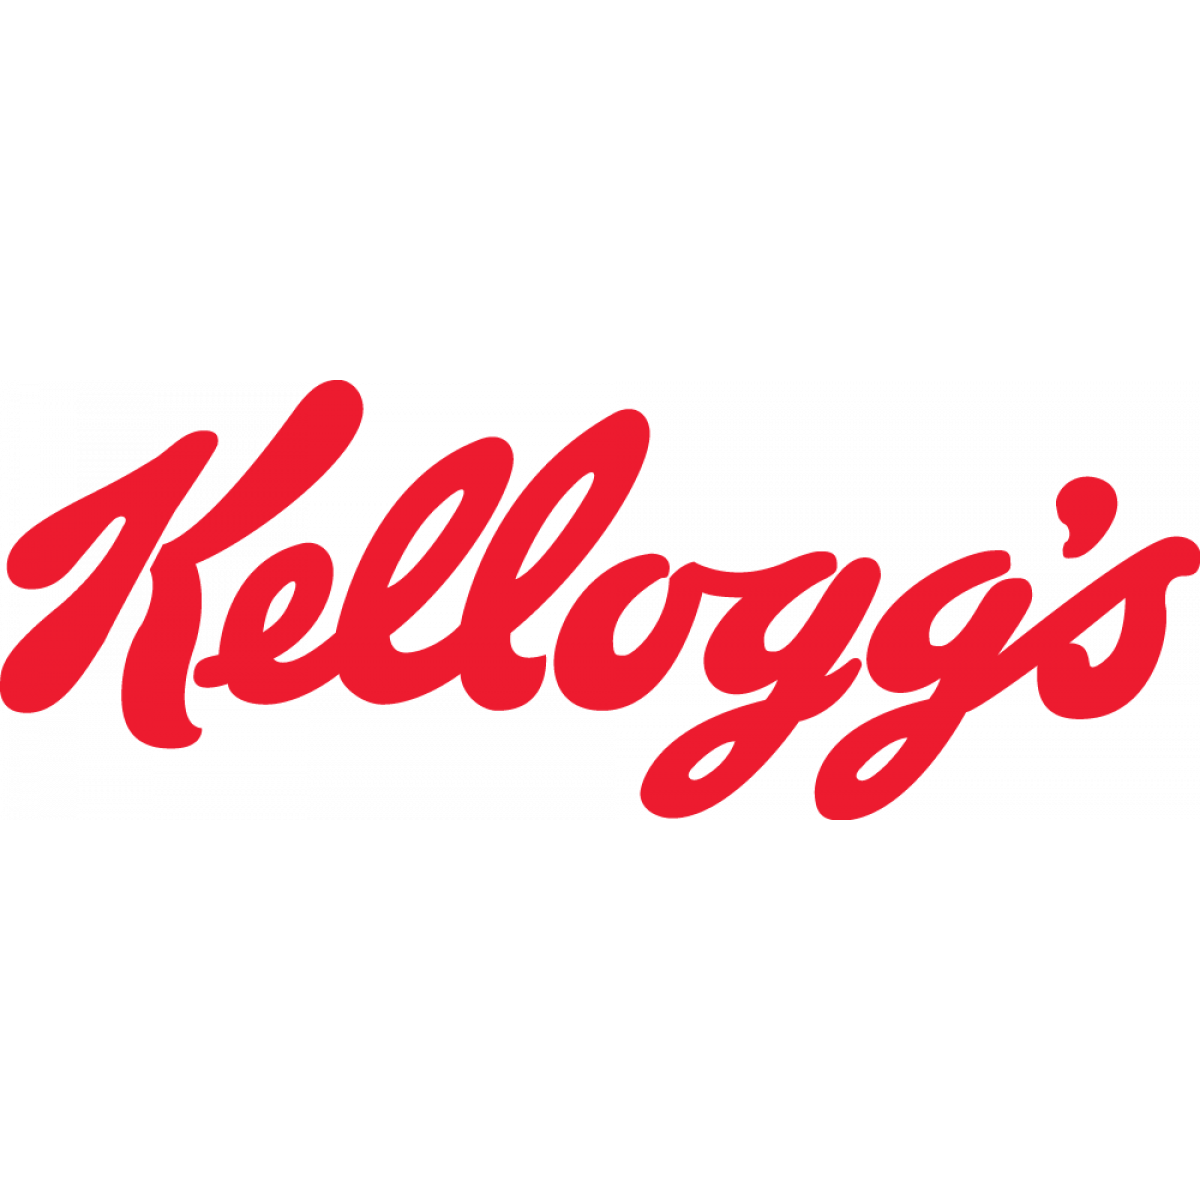 Kellogg’s Transparent Images